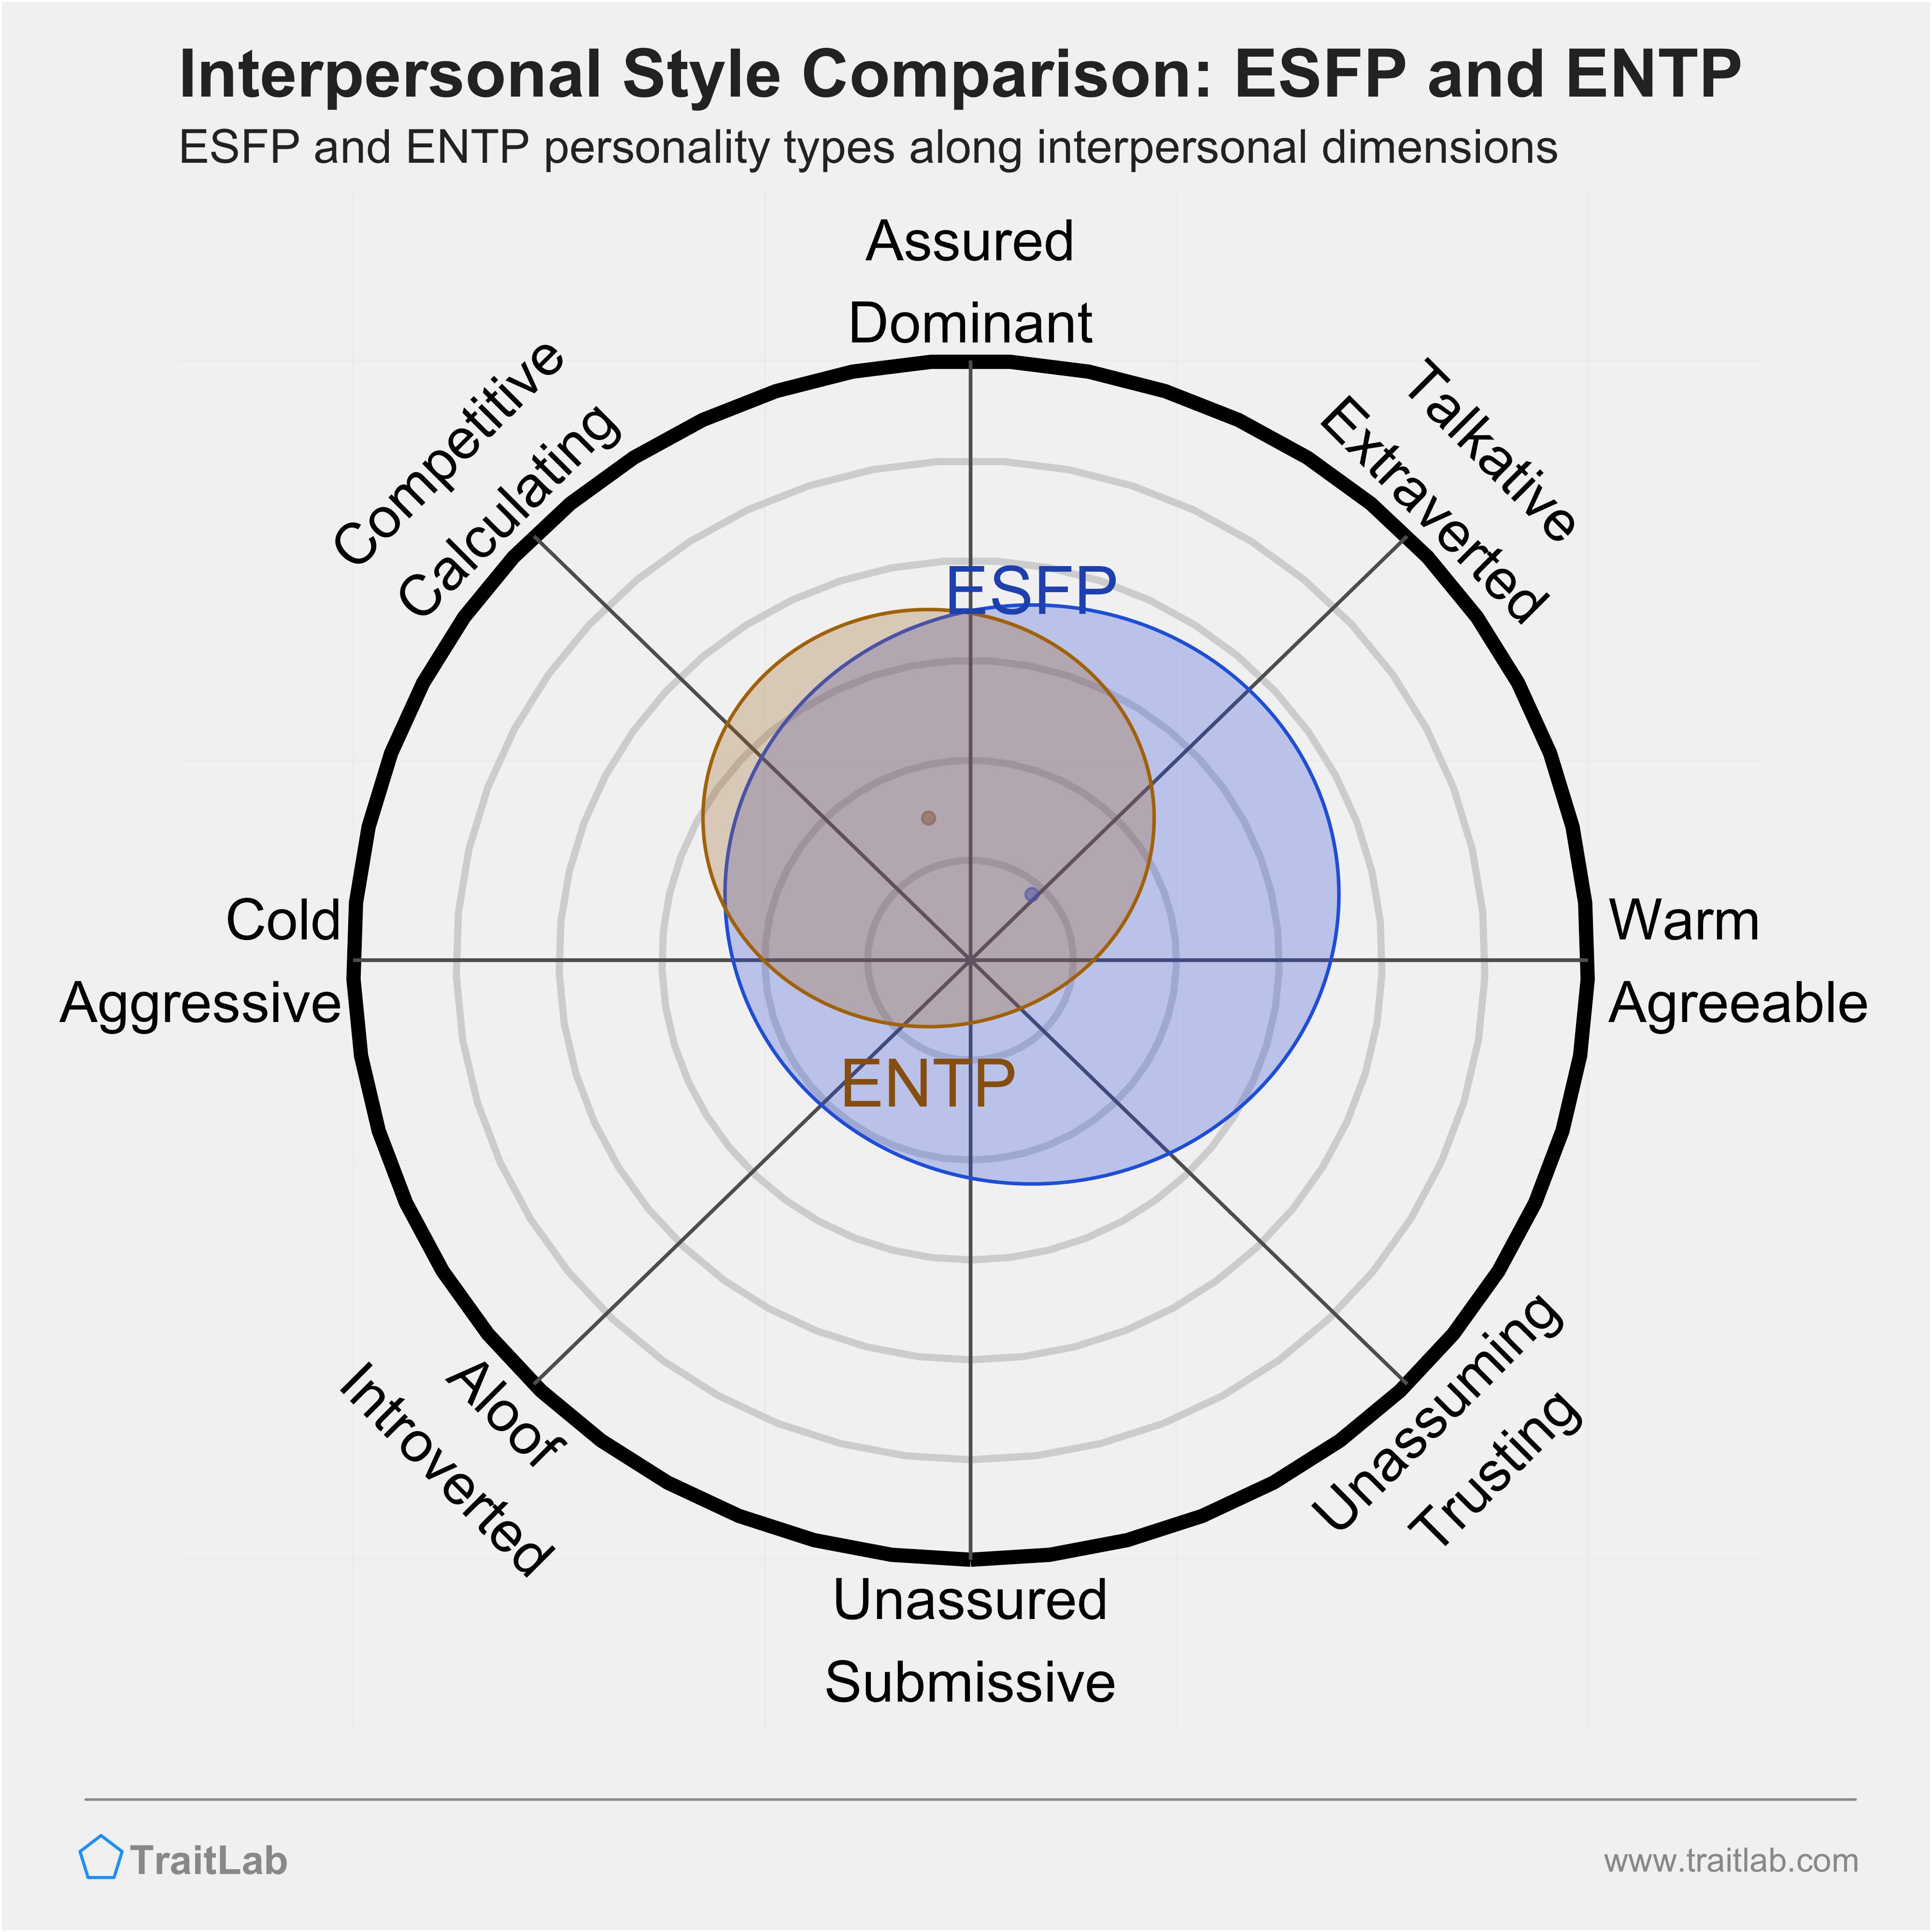 ESFP and ENTP comparison across interpersonal dimensions